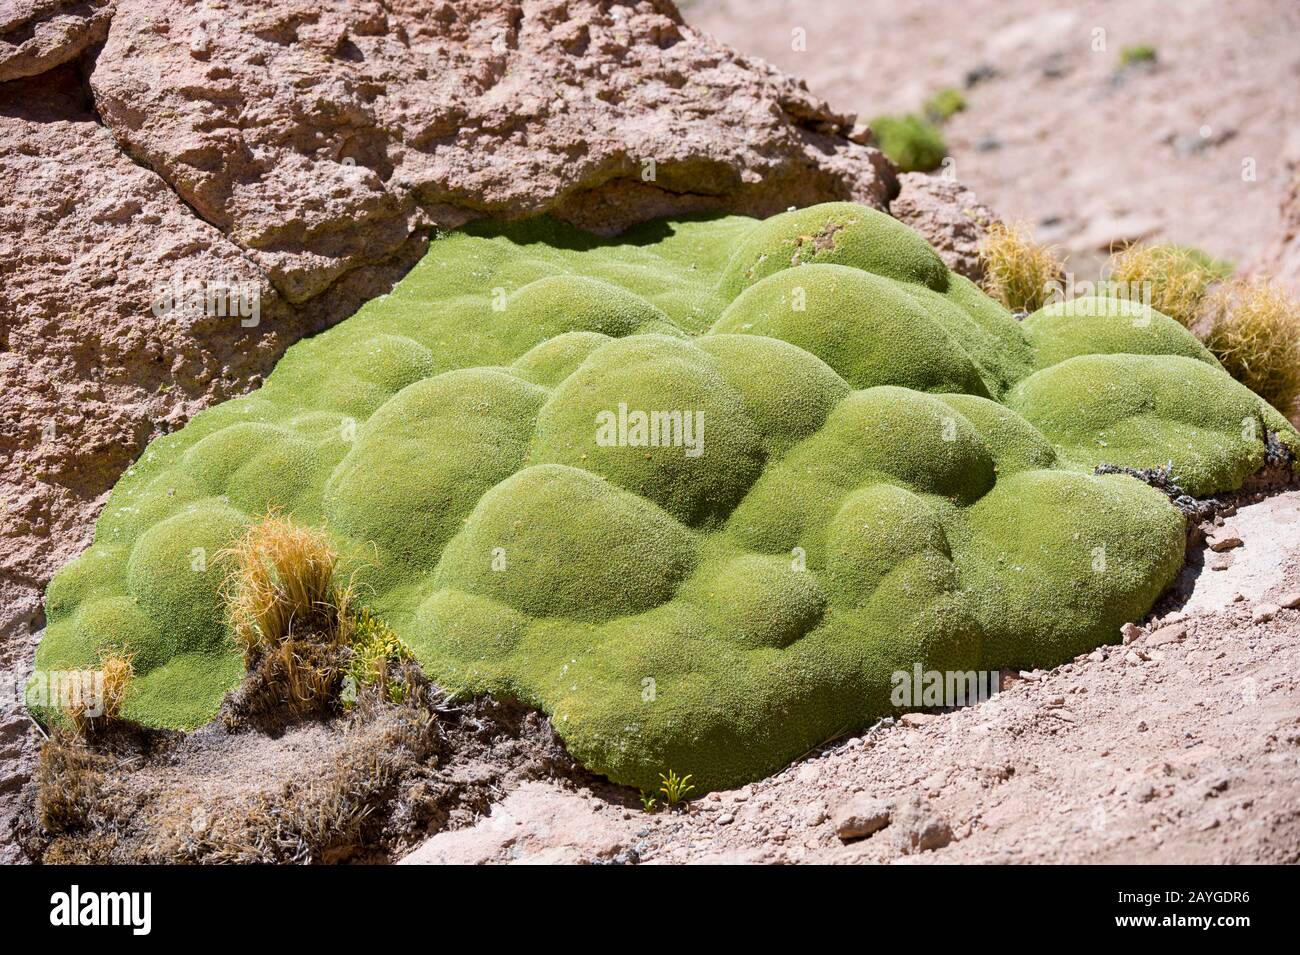 Llareta ou Yareta (Azorella compacta) dans le bassin géothermique El Tatio Geysers près de San Pedro de Atacama dans le désert d'Atacama, dans le nord du Chili. Banque D'Images